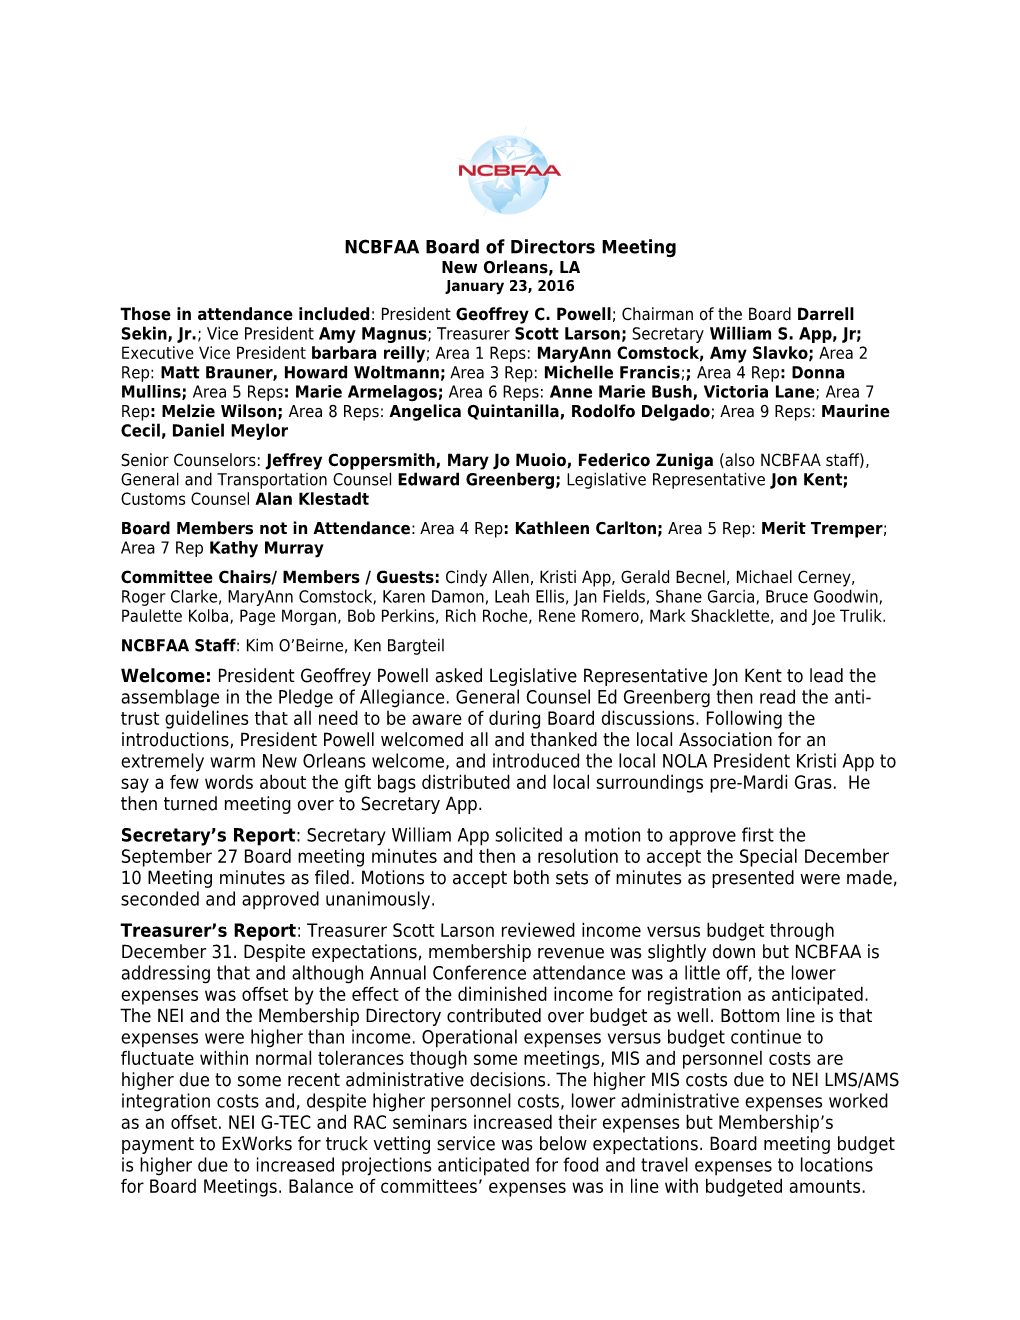 NCBFAA - January 2016 Board Meeting Minutes (00344740-2)